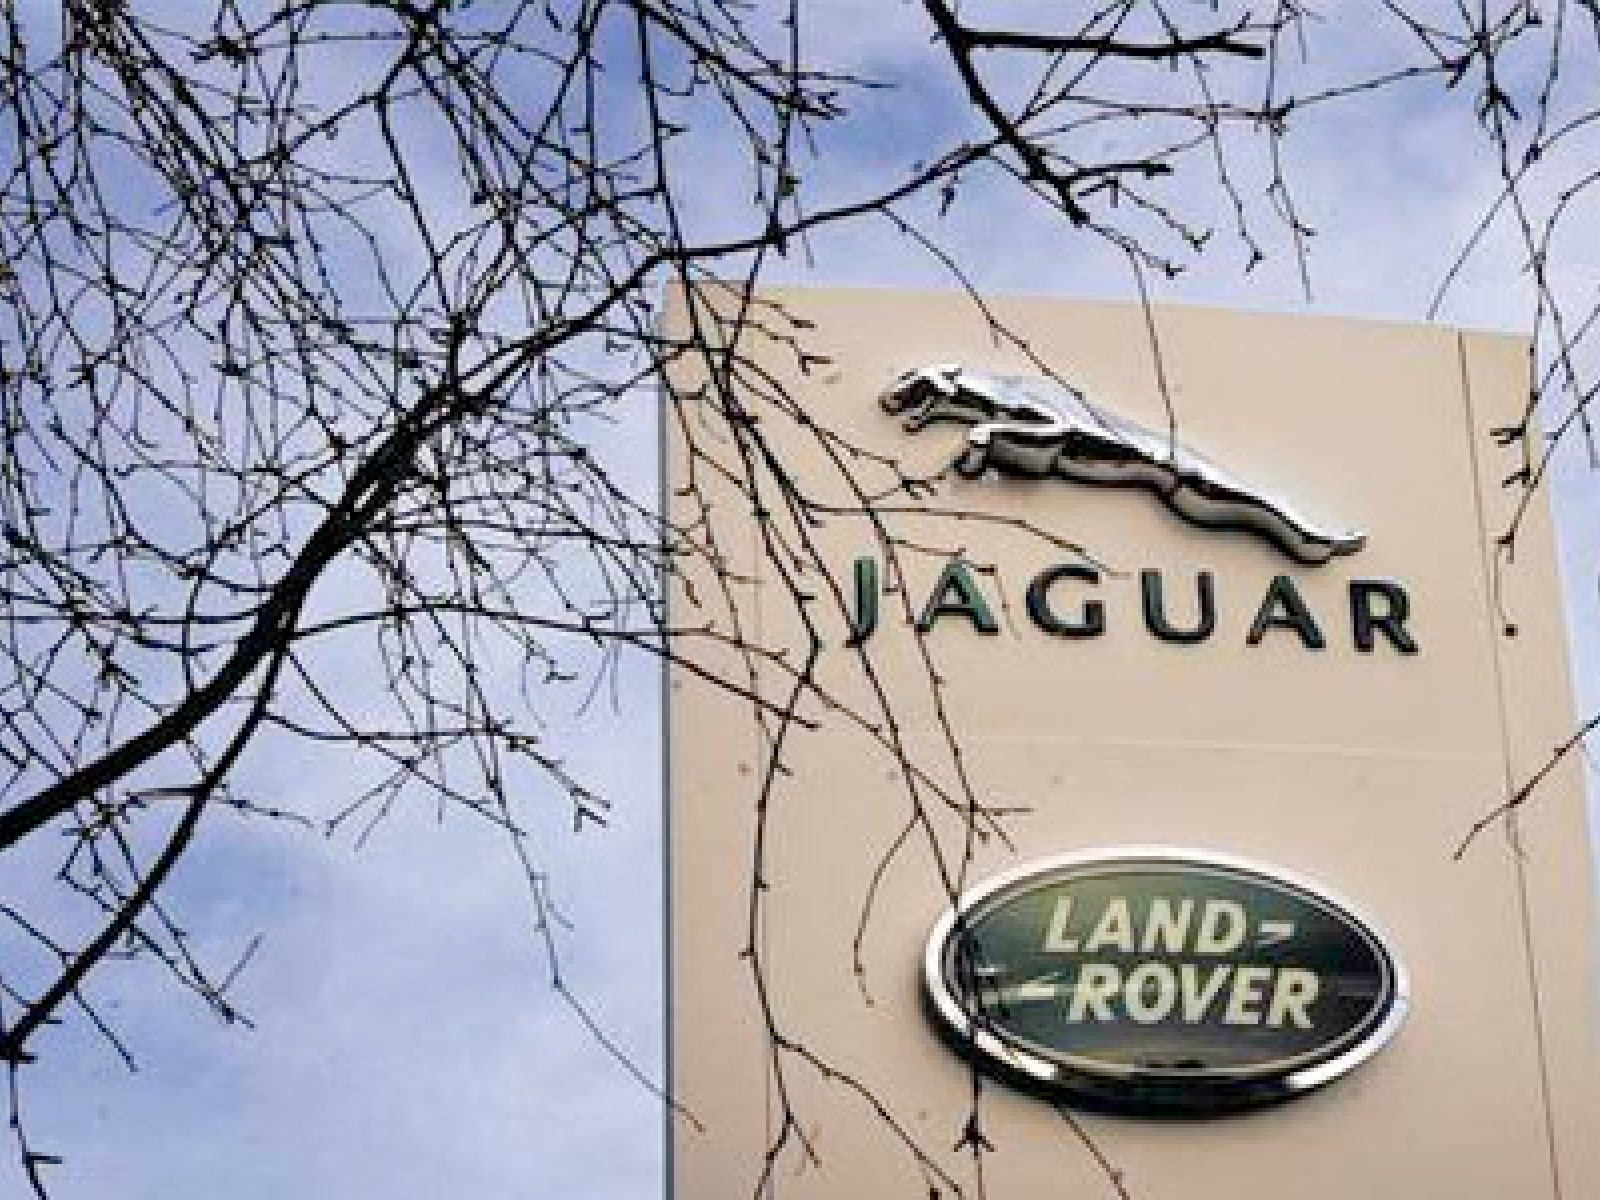 1,000 new jobs at Jaguar Landrover